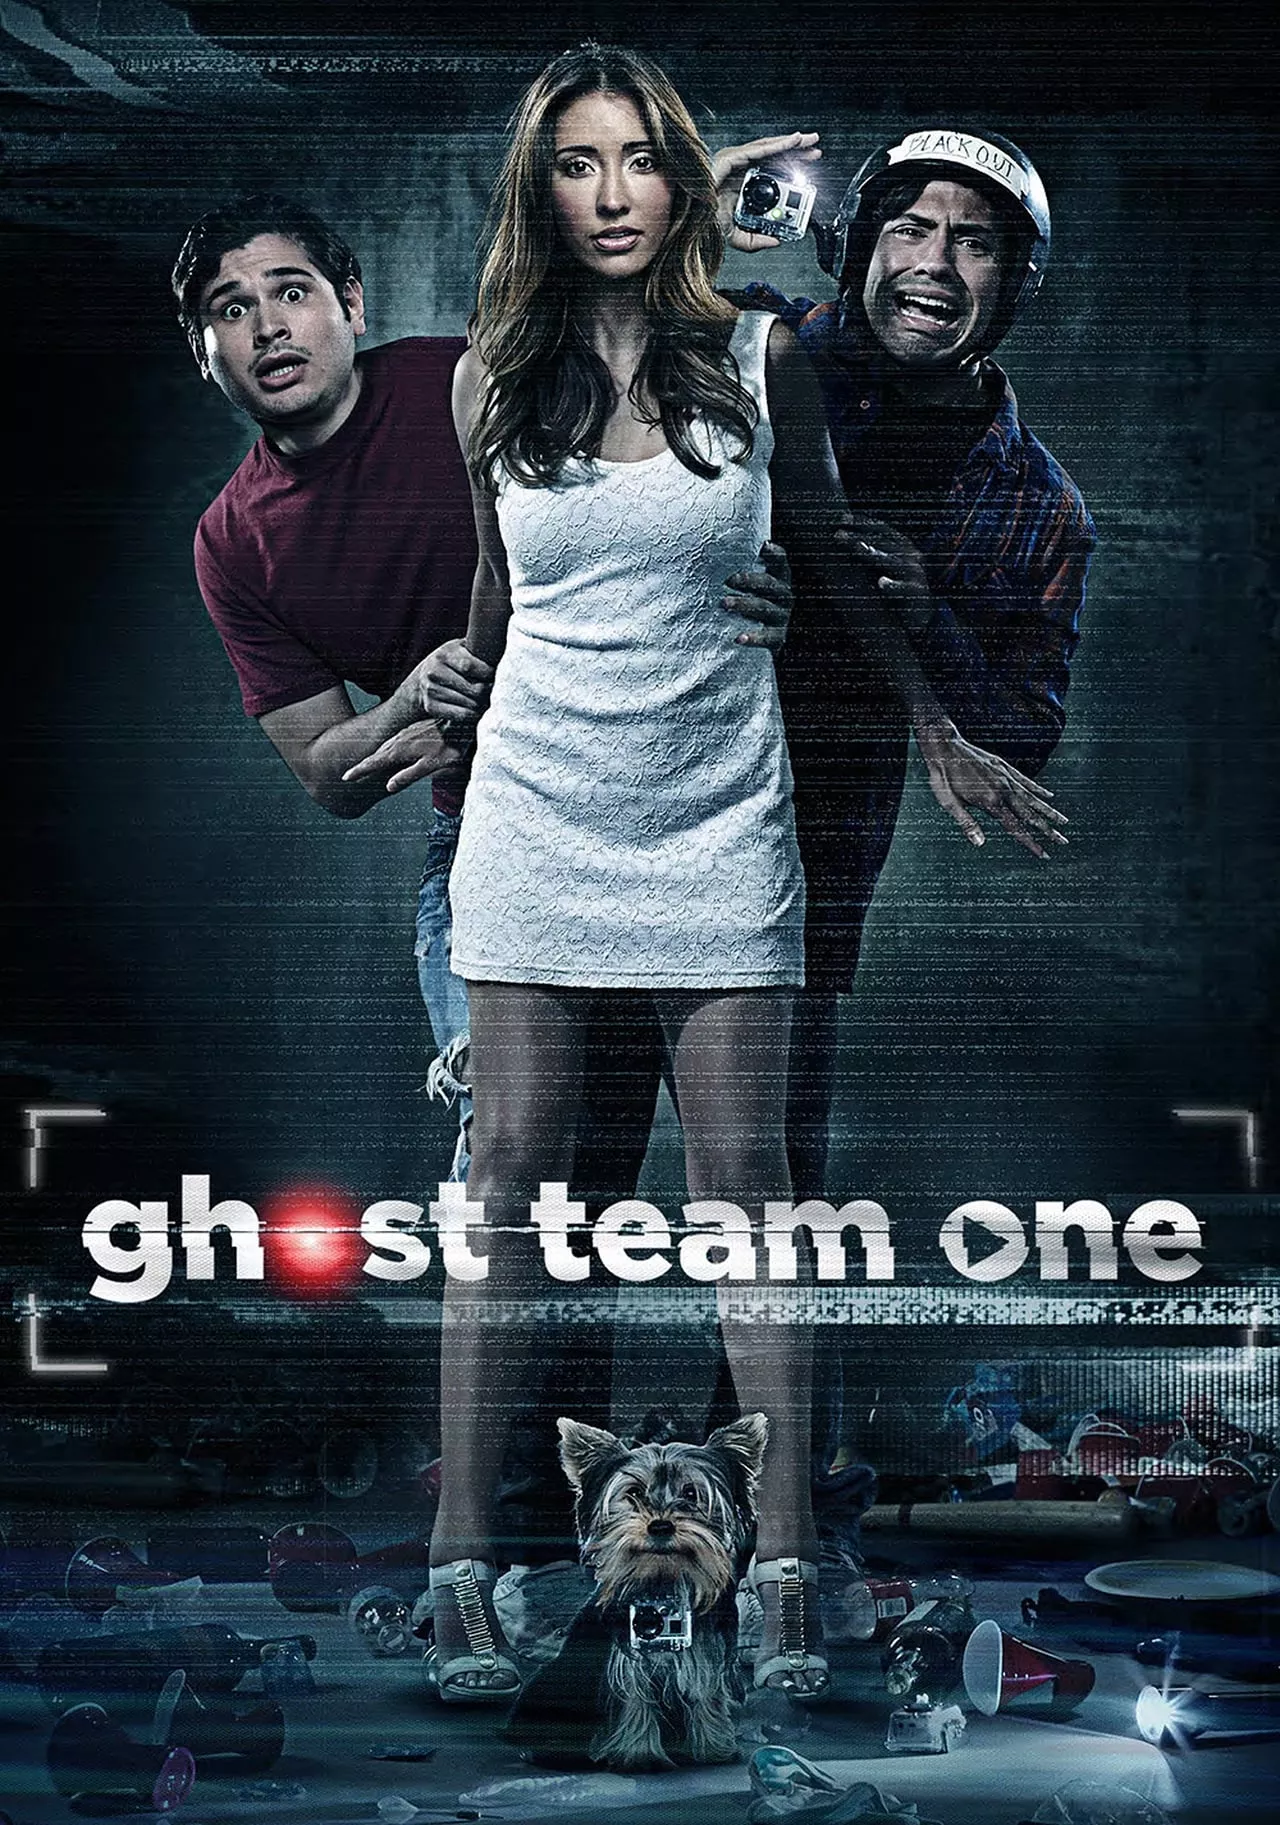 Ghost Team One (2013) ทีมป่วนก๊วนผีเกรียน